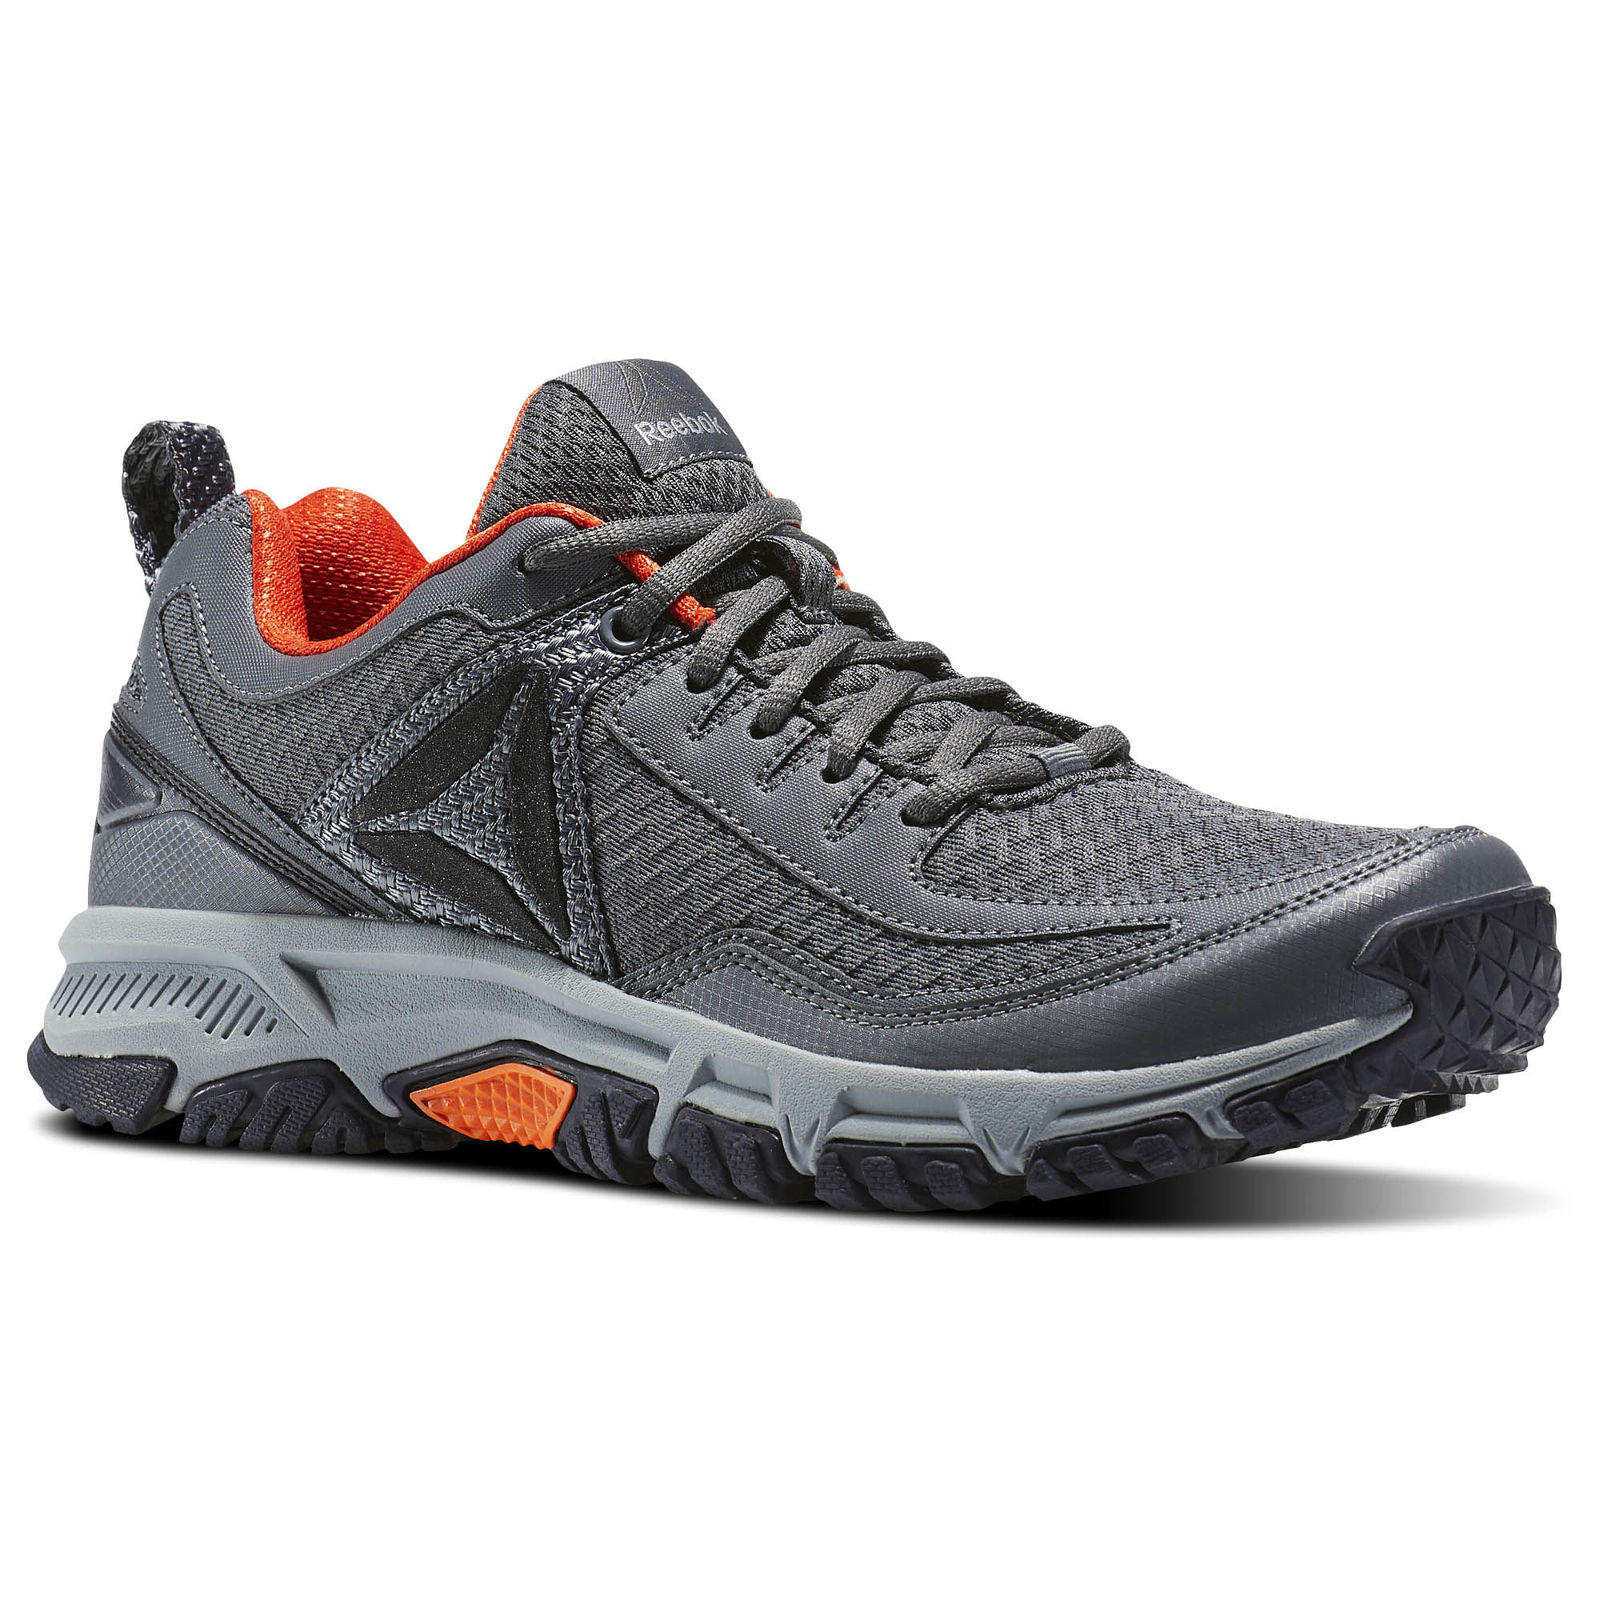 Reebok men’s Ridgerider Trail 2.0 shoes for $25 shipped